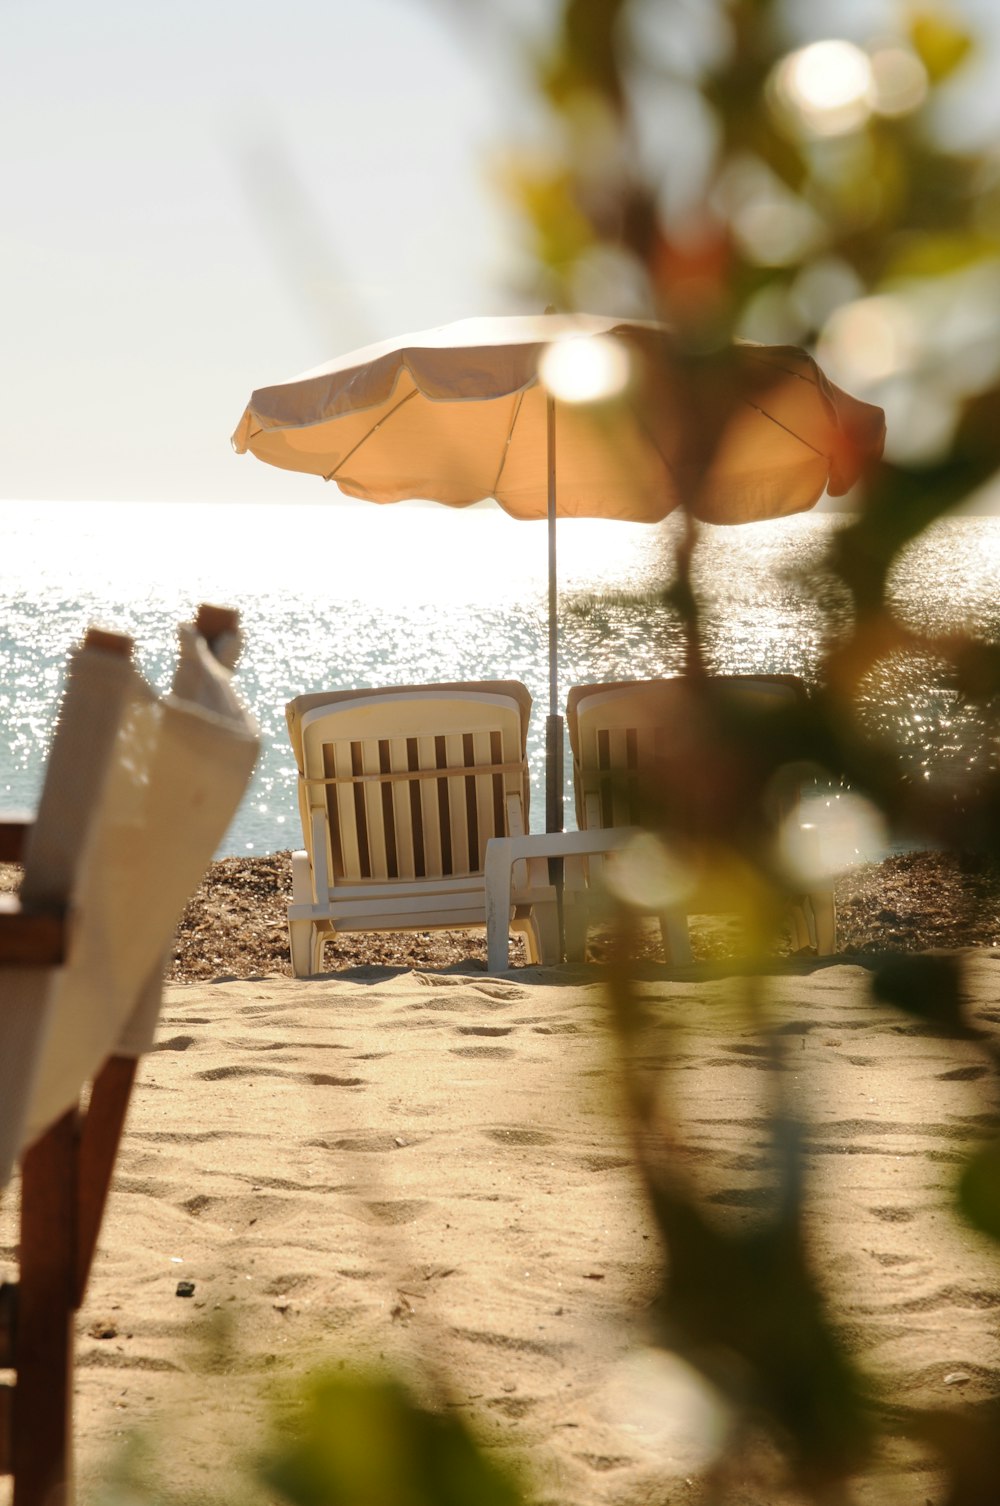 Un paio di sedie a sdraio seduti in cima a una spiaggia sabbiosa